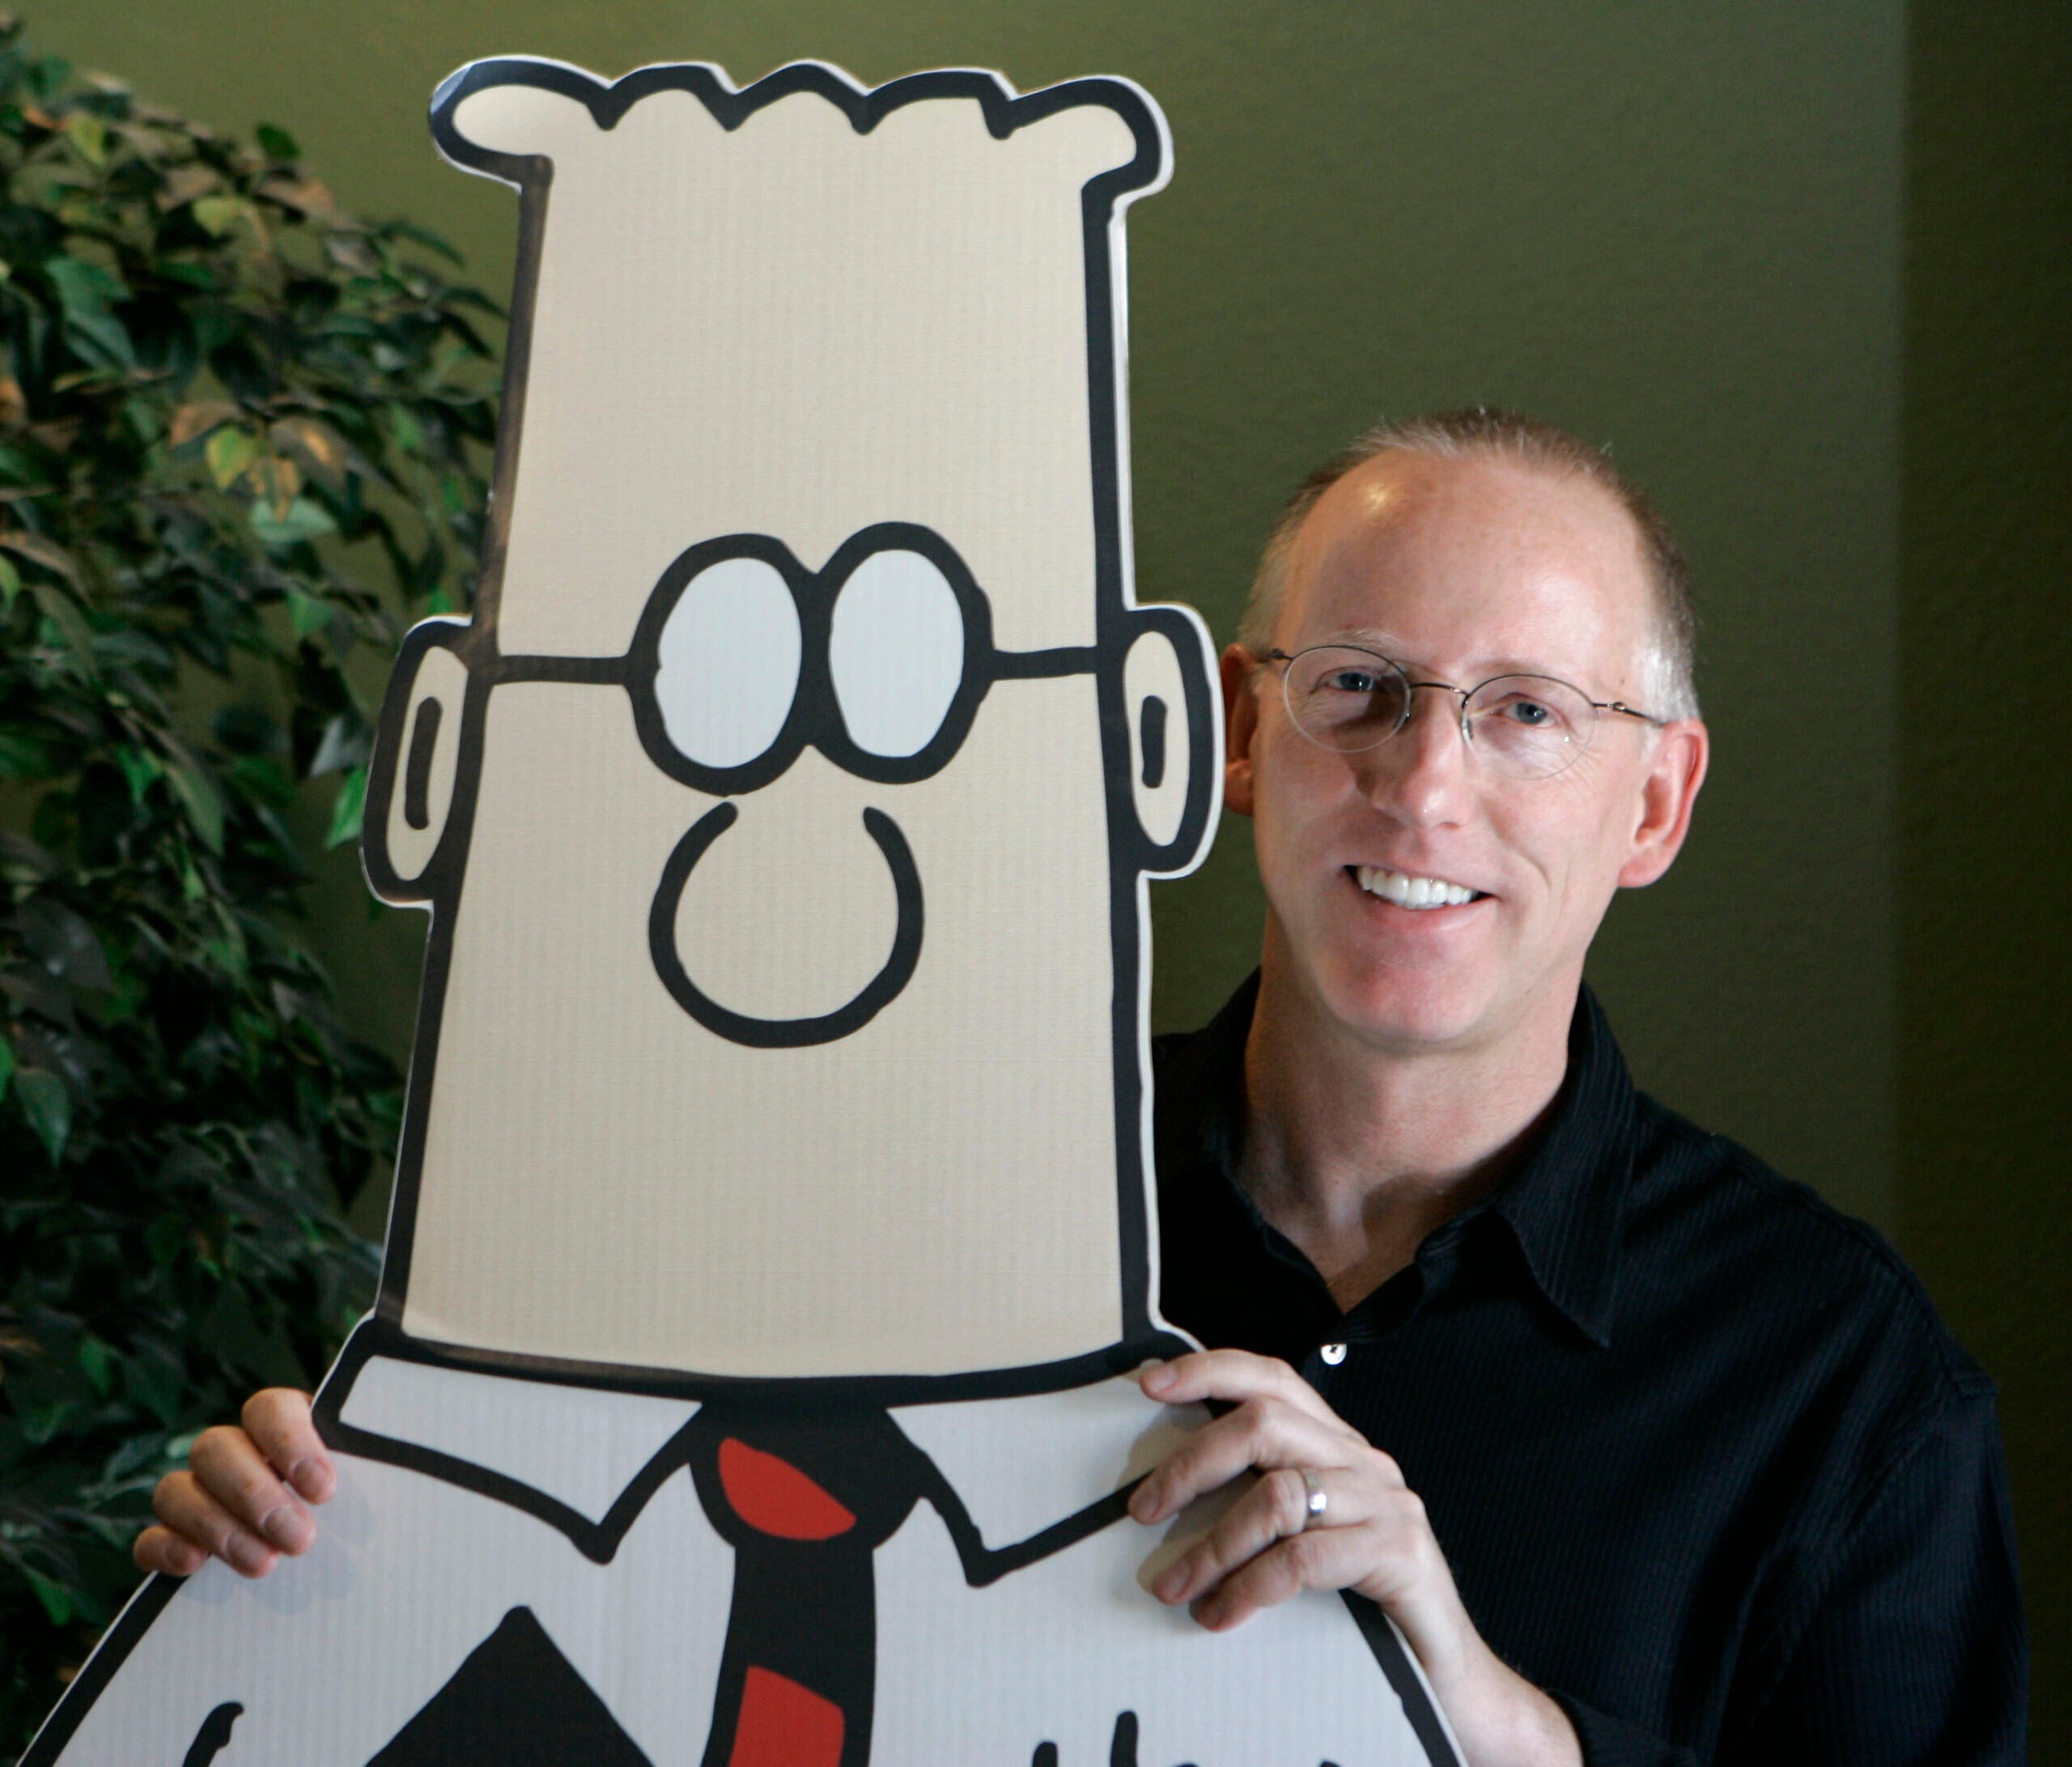 Cartoonist Scott Adams with a cardboard cutout of his character Dilbert